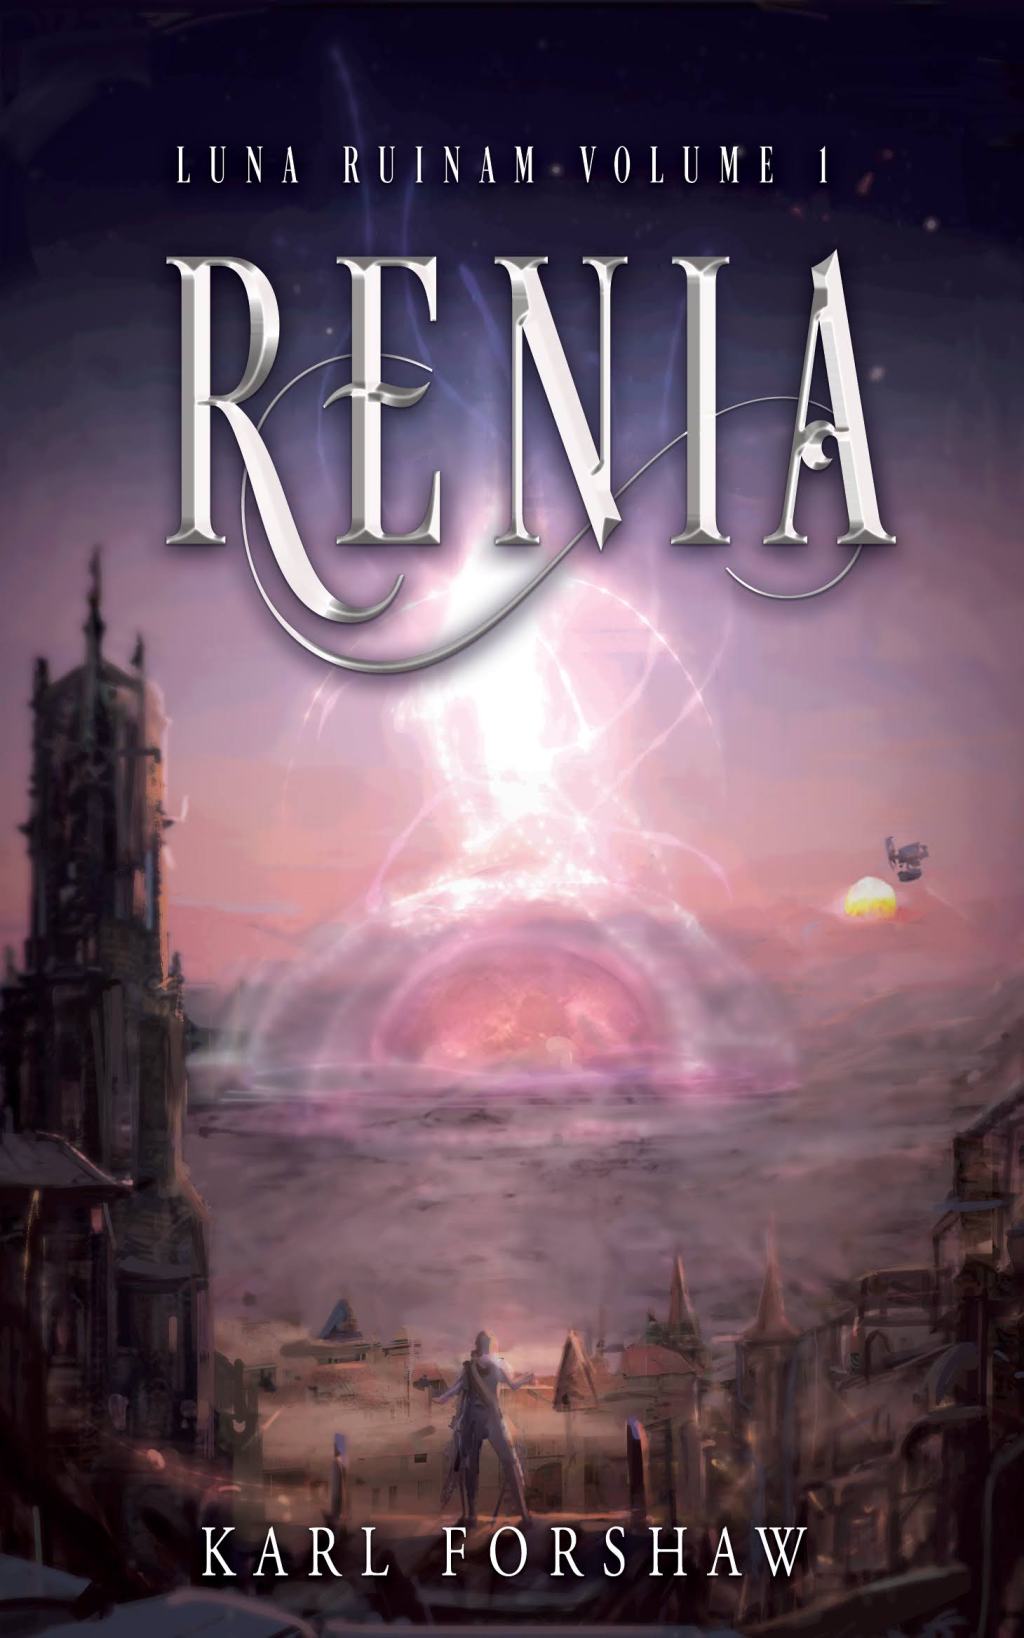 Renia by Karl Forshaw